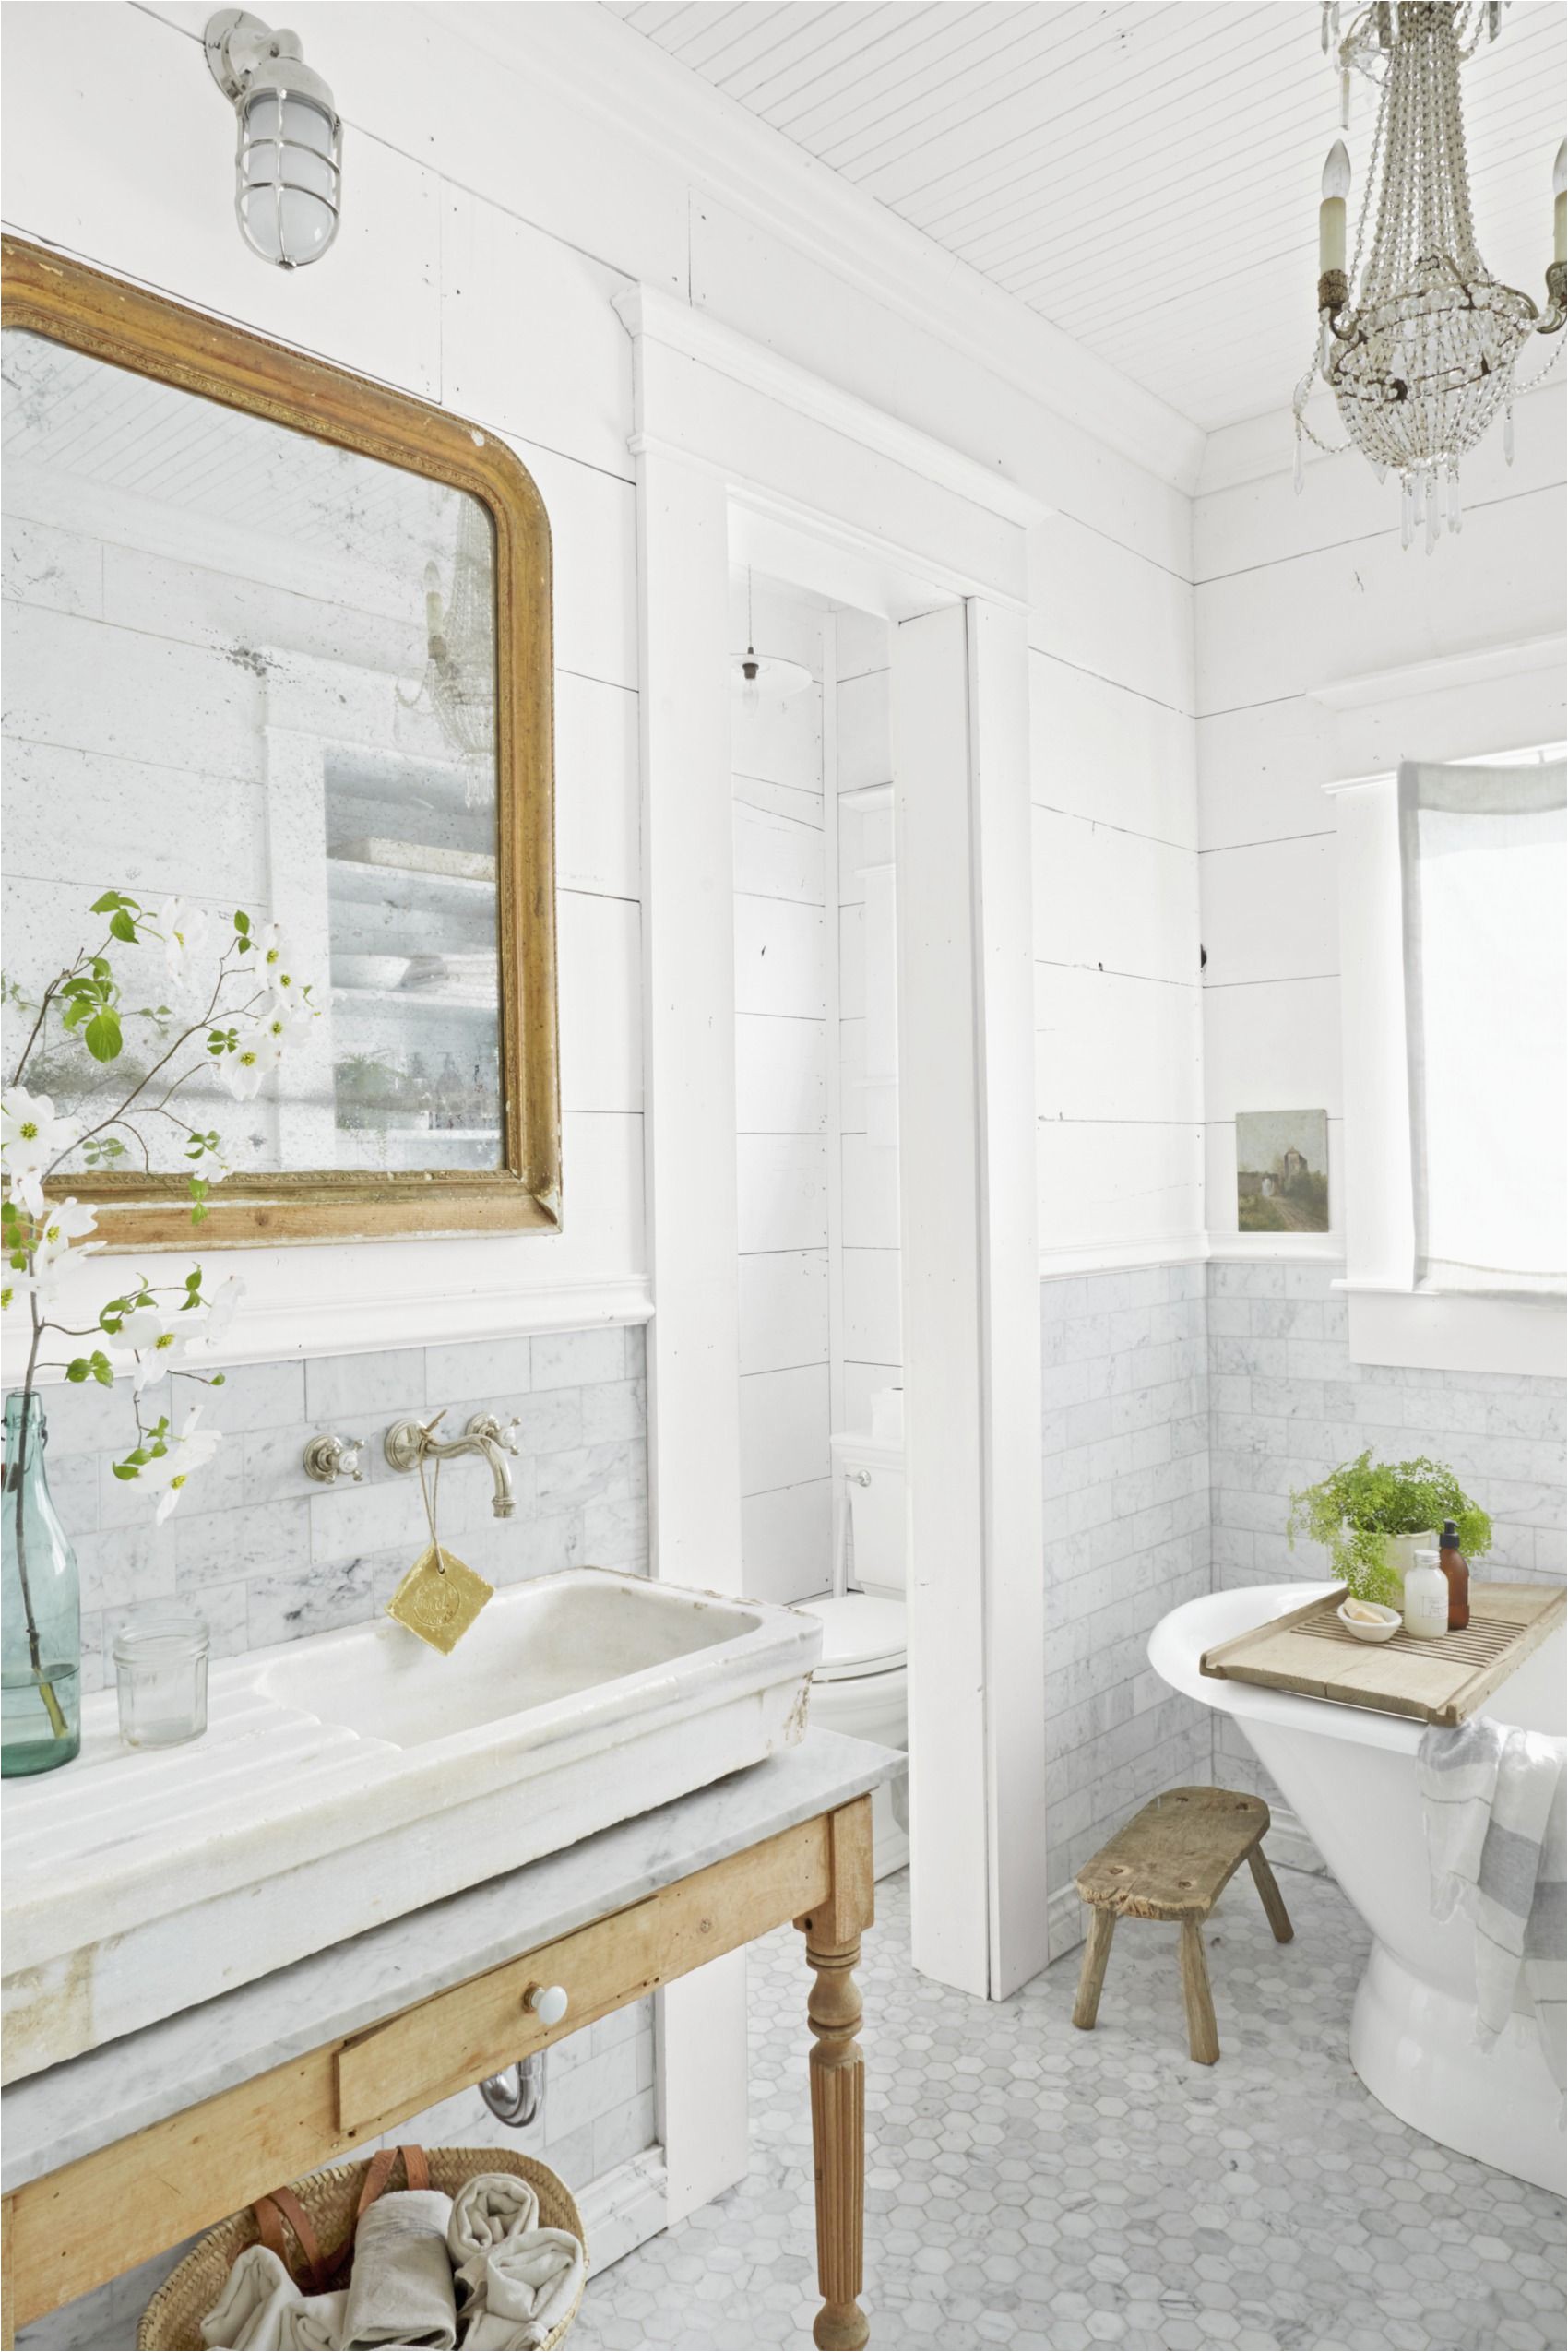 Gold and White Bathroom Rugs 100 Best Bathroom Decorating Ideas Decor & Design